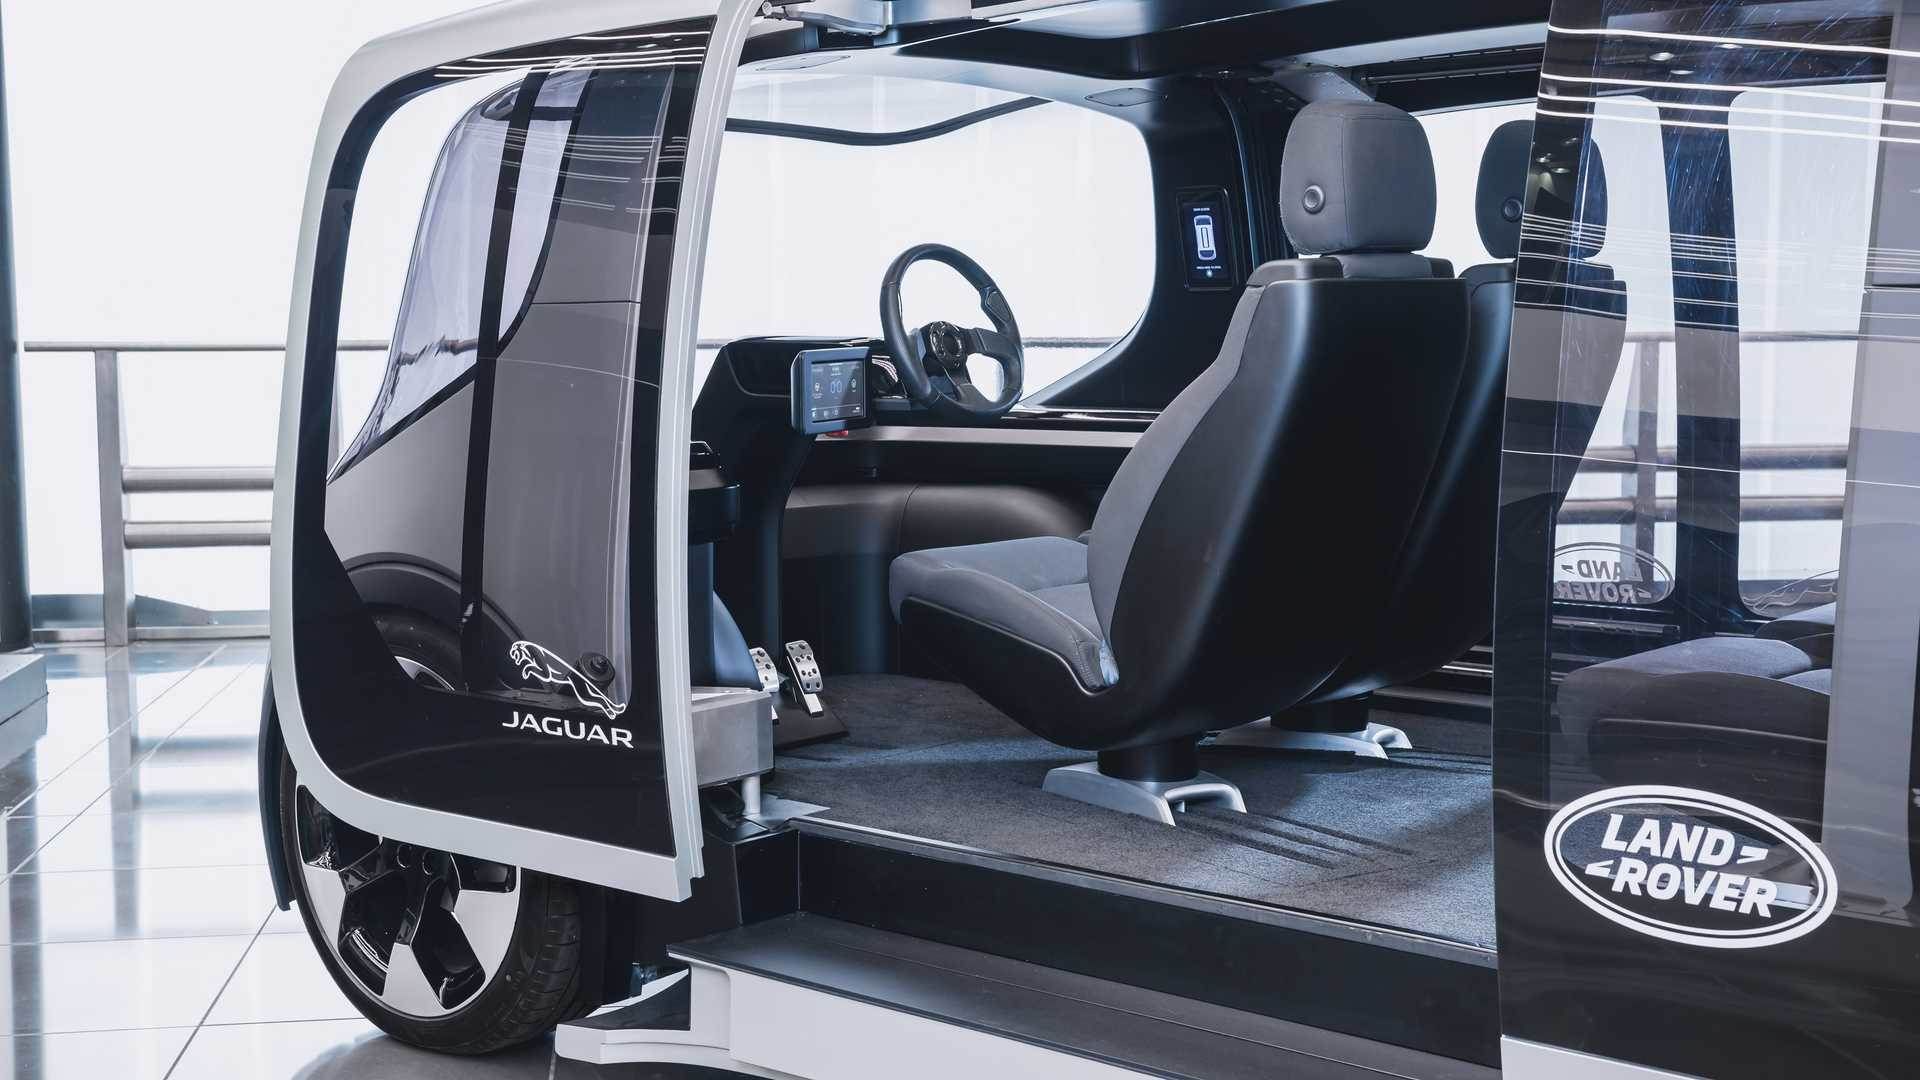 Jaguar Land Rover autonomous electric car / جگوار لندرور